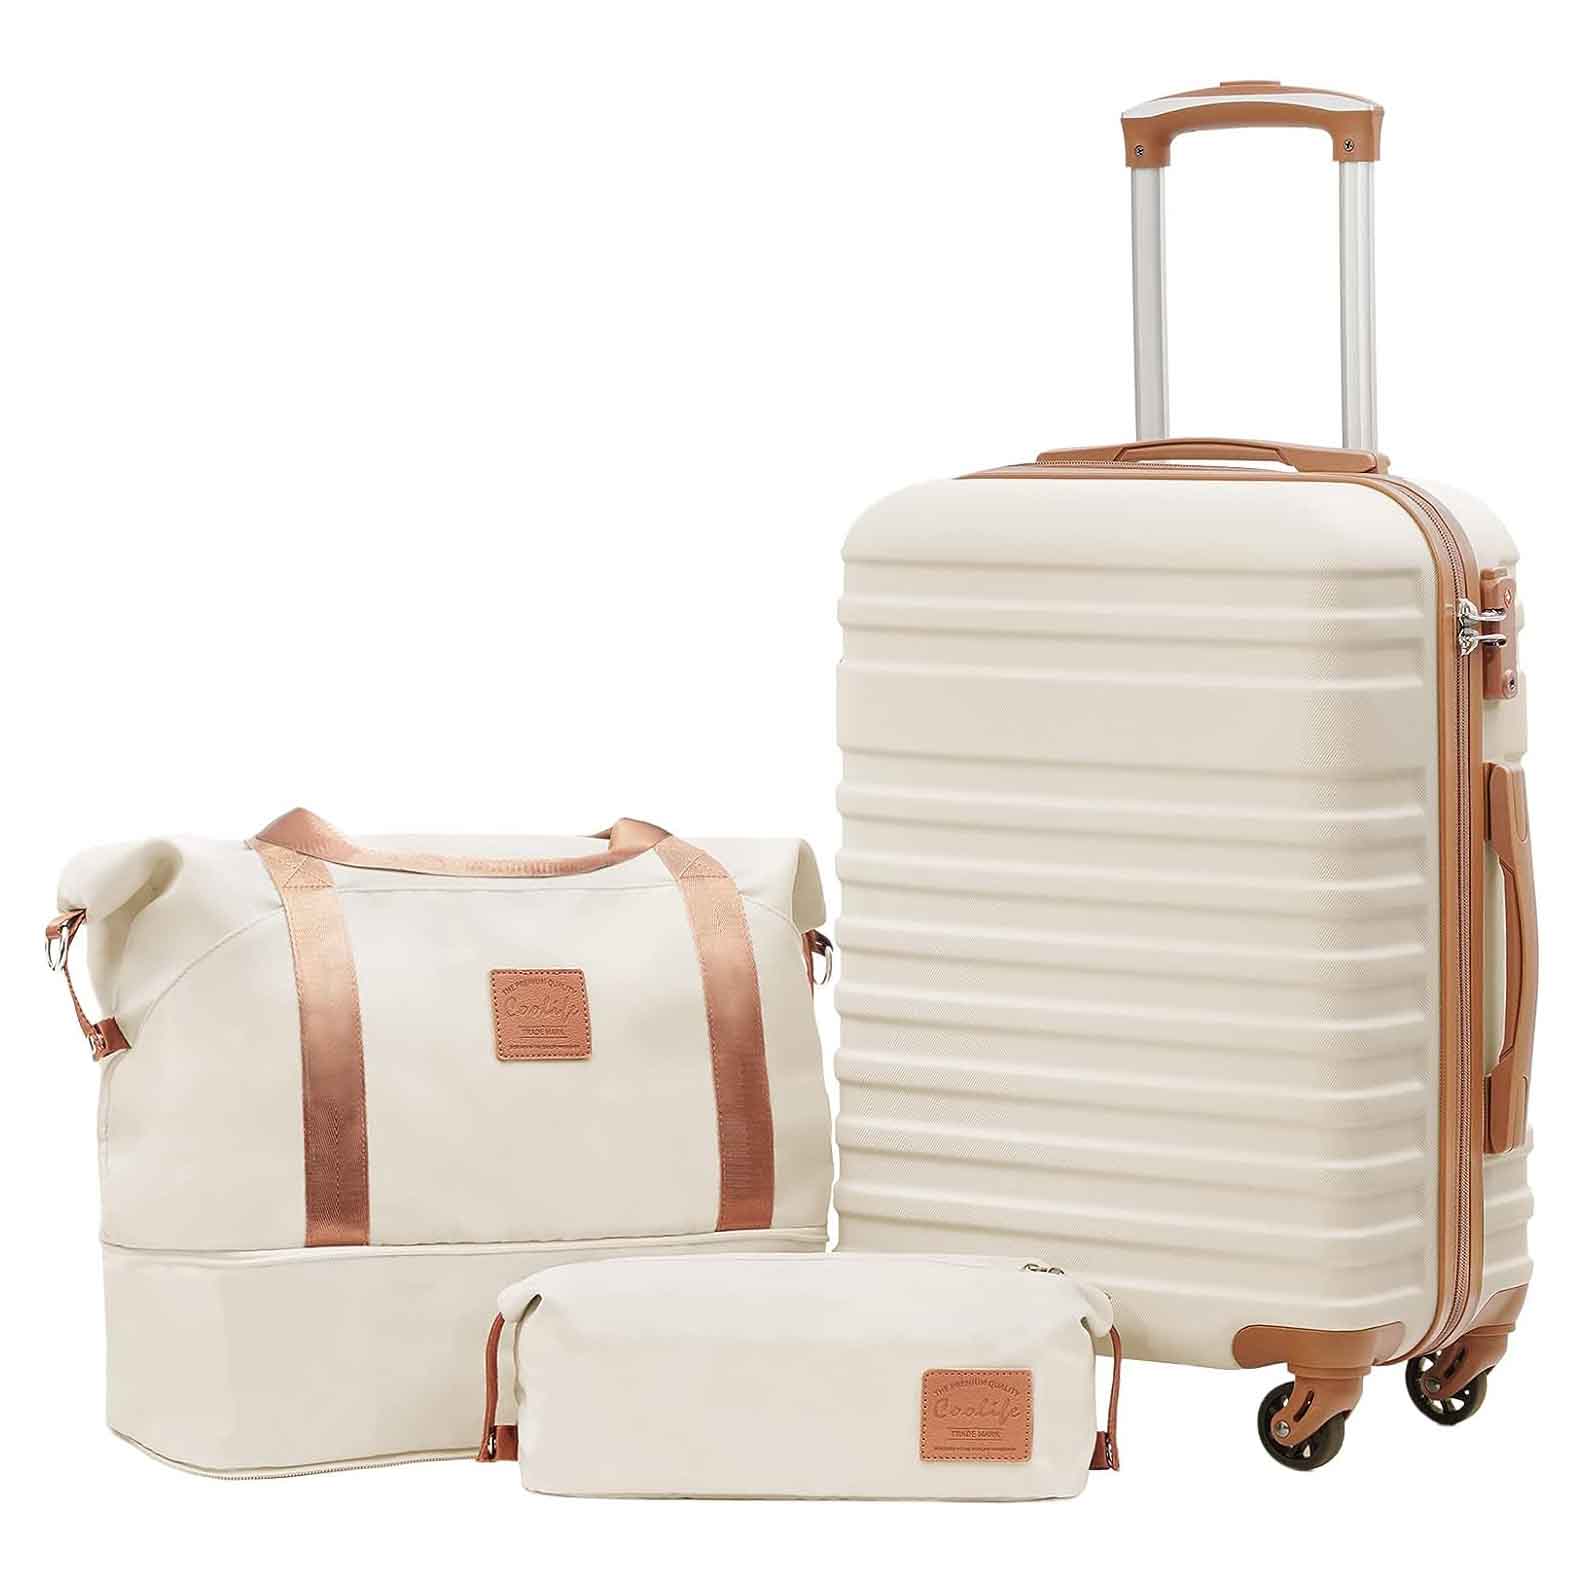 Coolife Suitcase Set Three-Piece Carry On Hardside Luggage